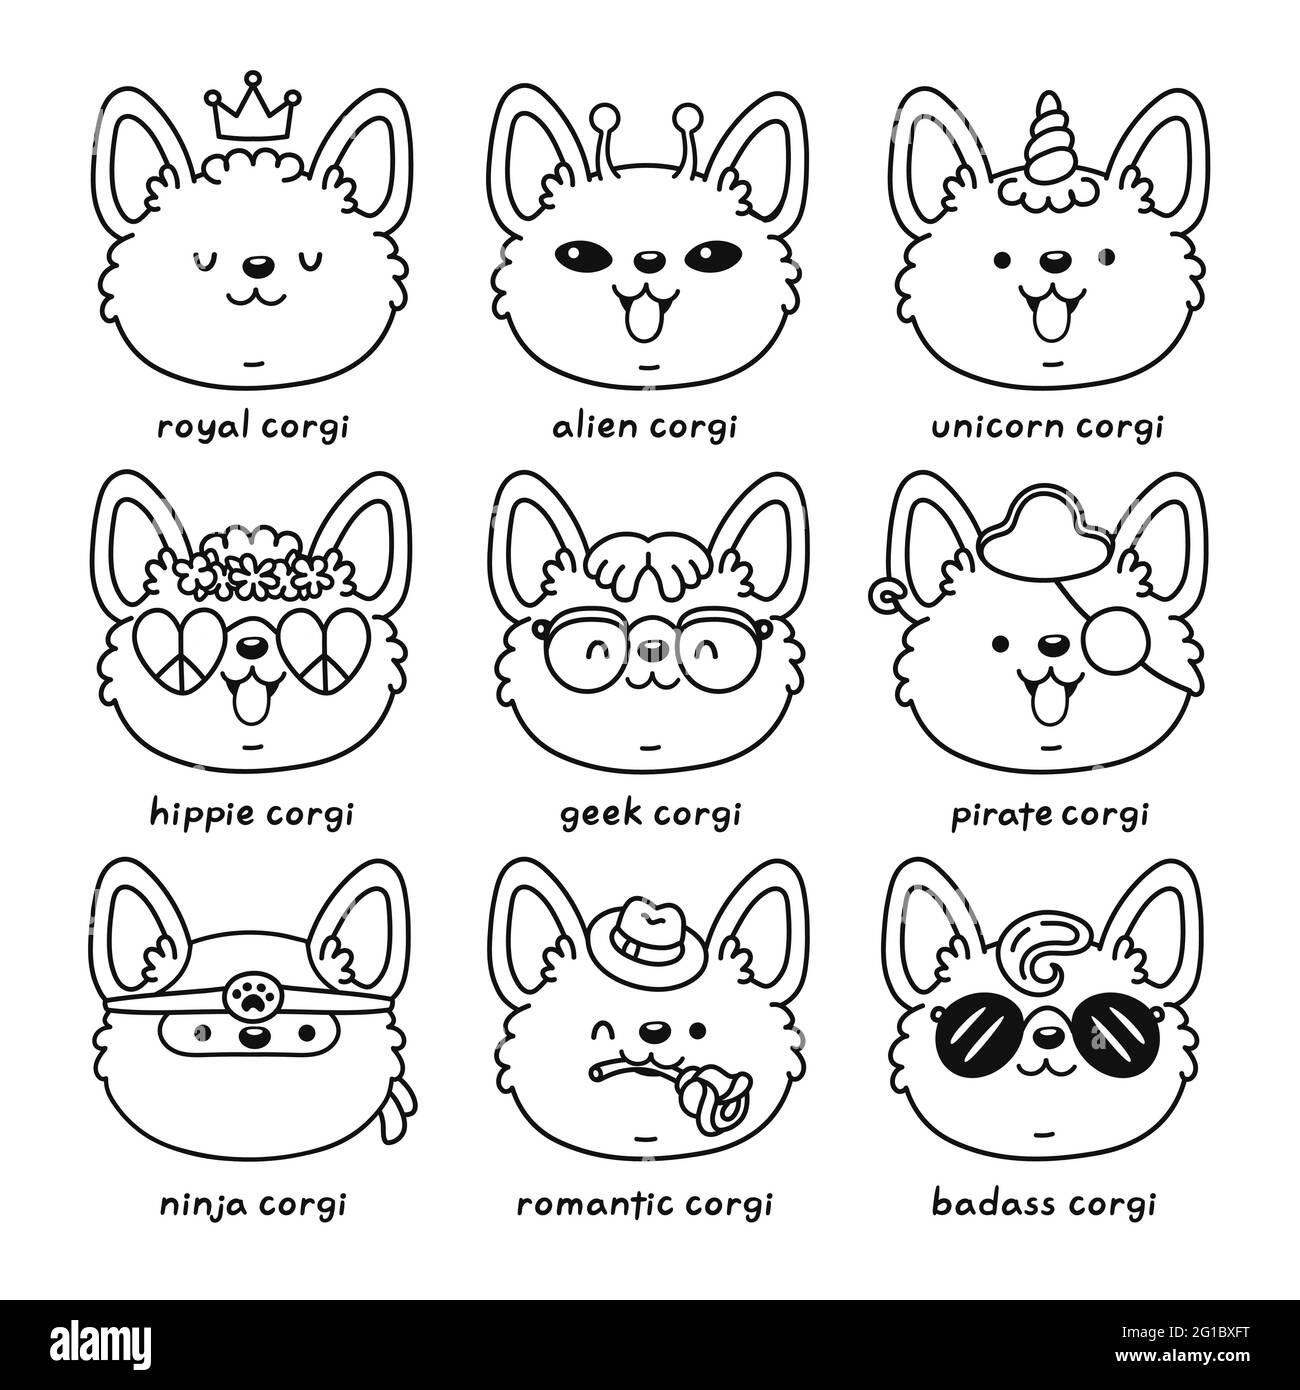 Cute happy corgi dog face set collection vector line cartoon kawaii character icon hand drawn style